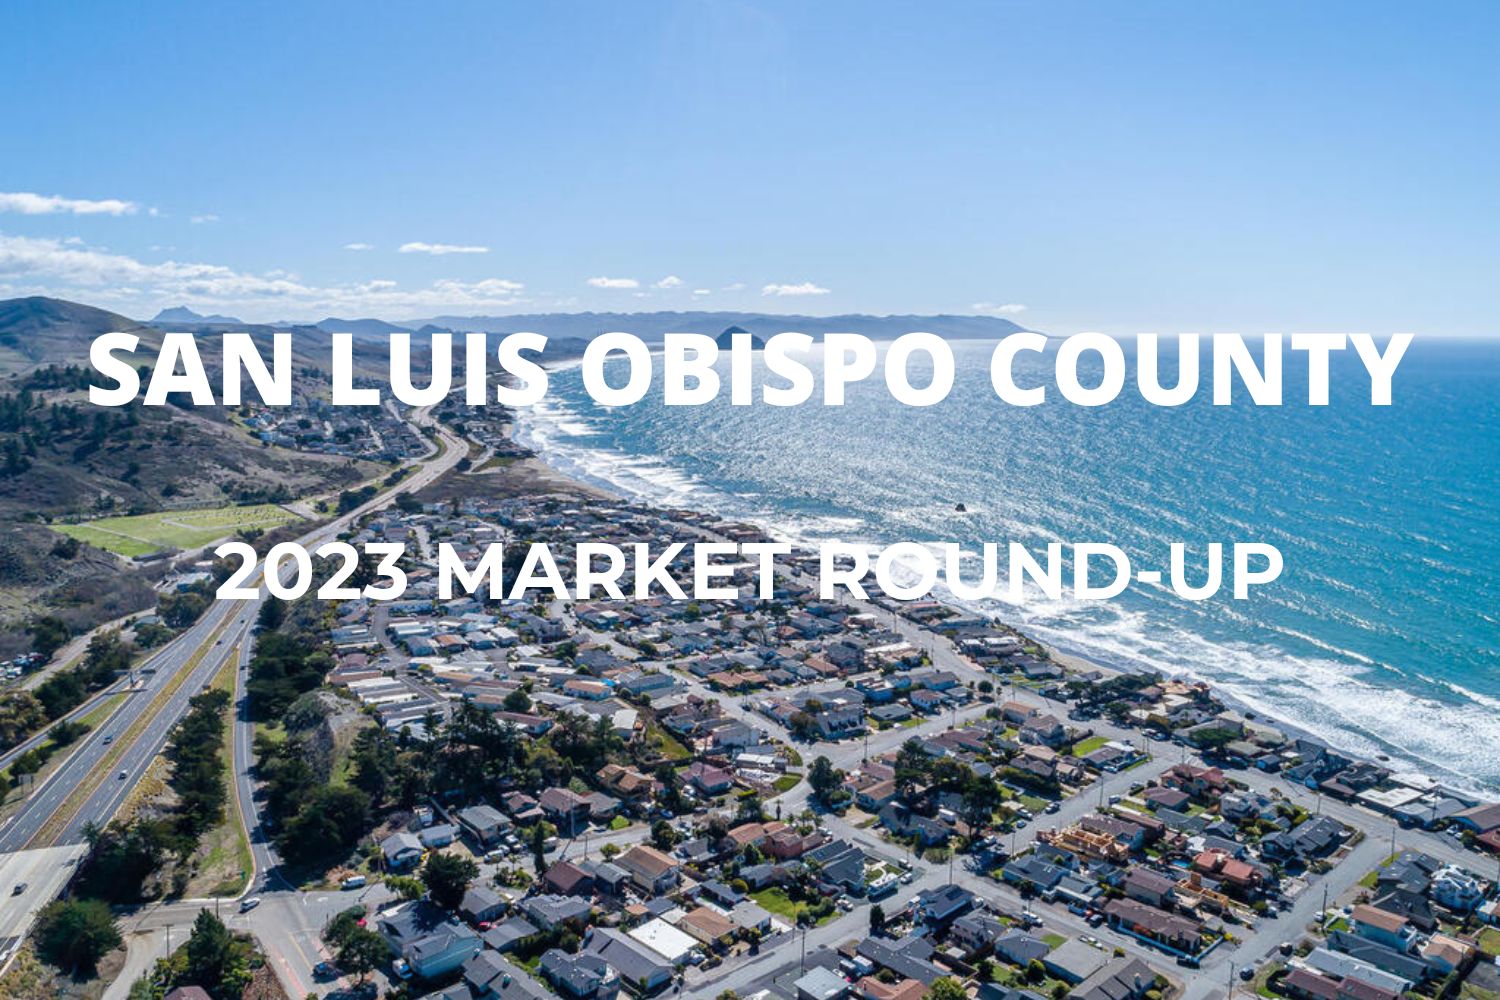 2023 San Luis Obispo County Market Round-Up